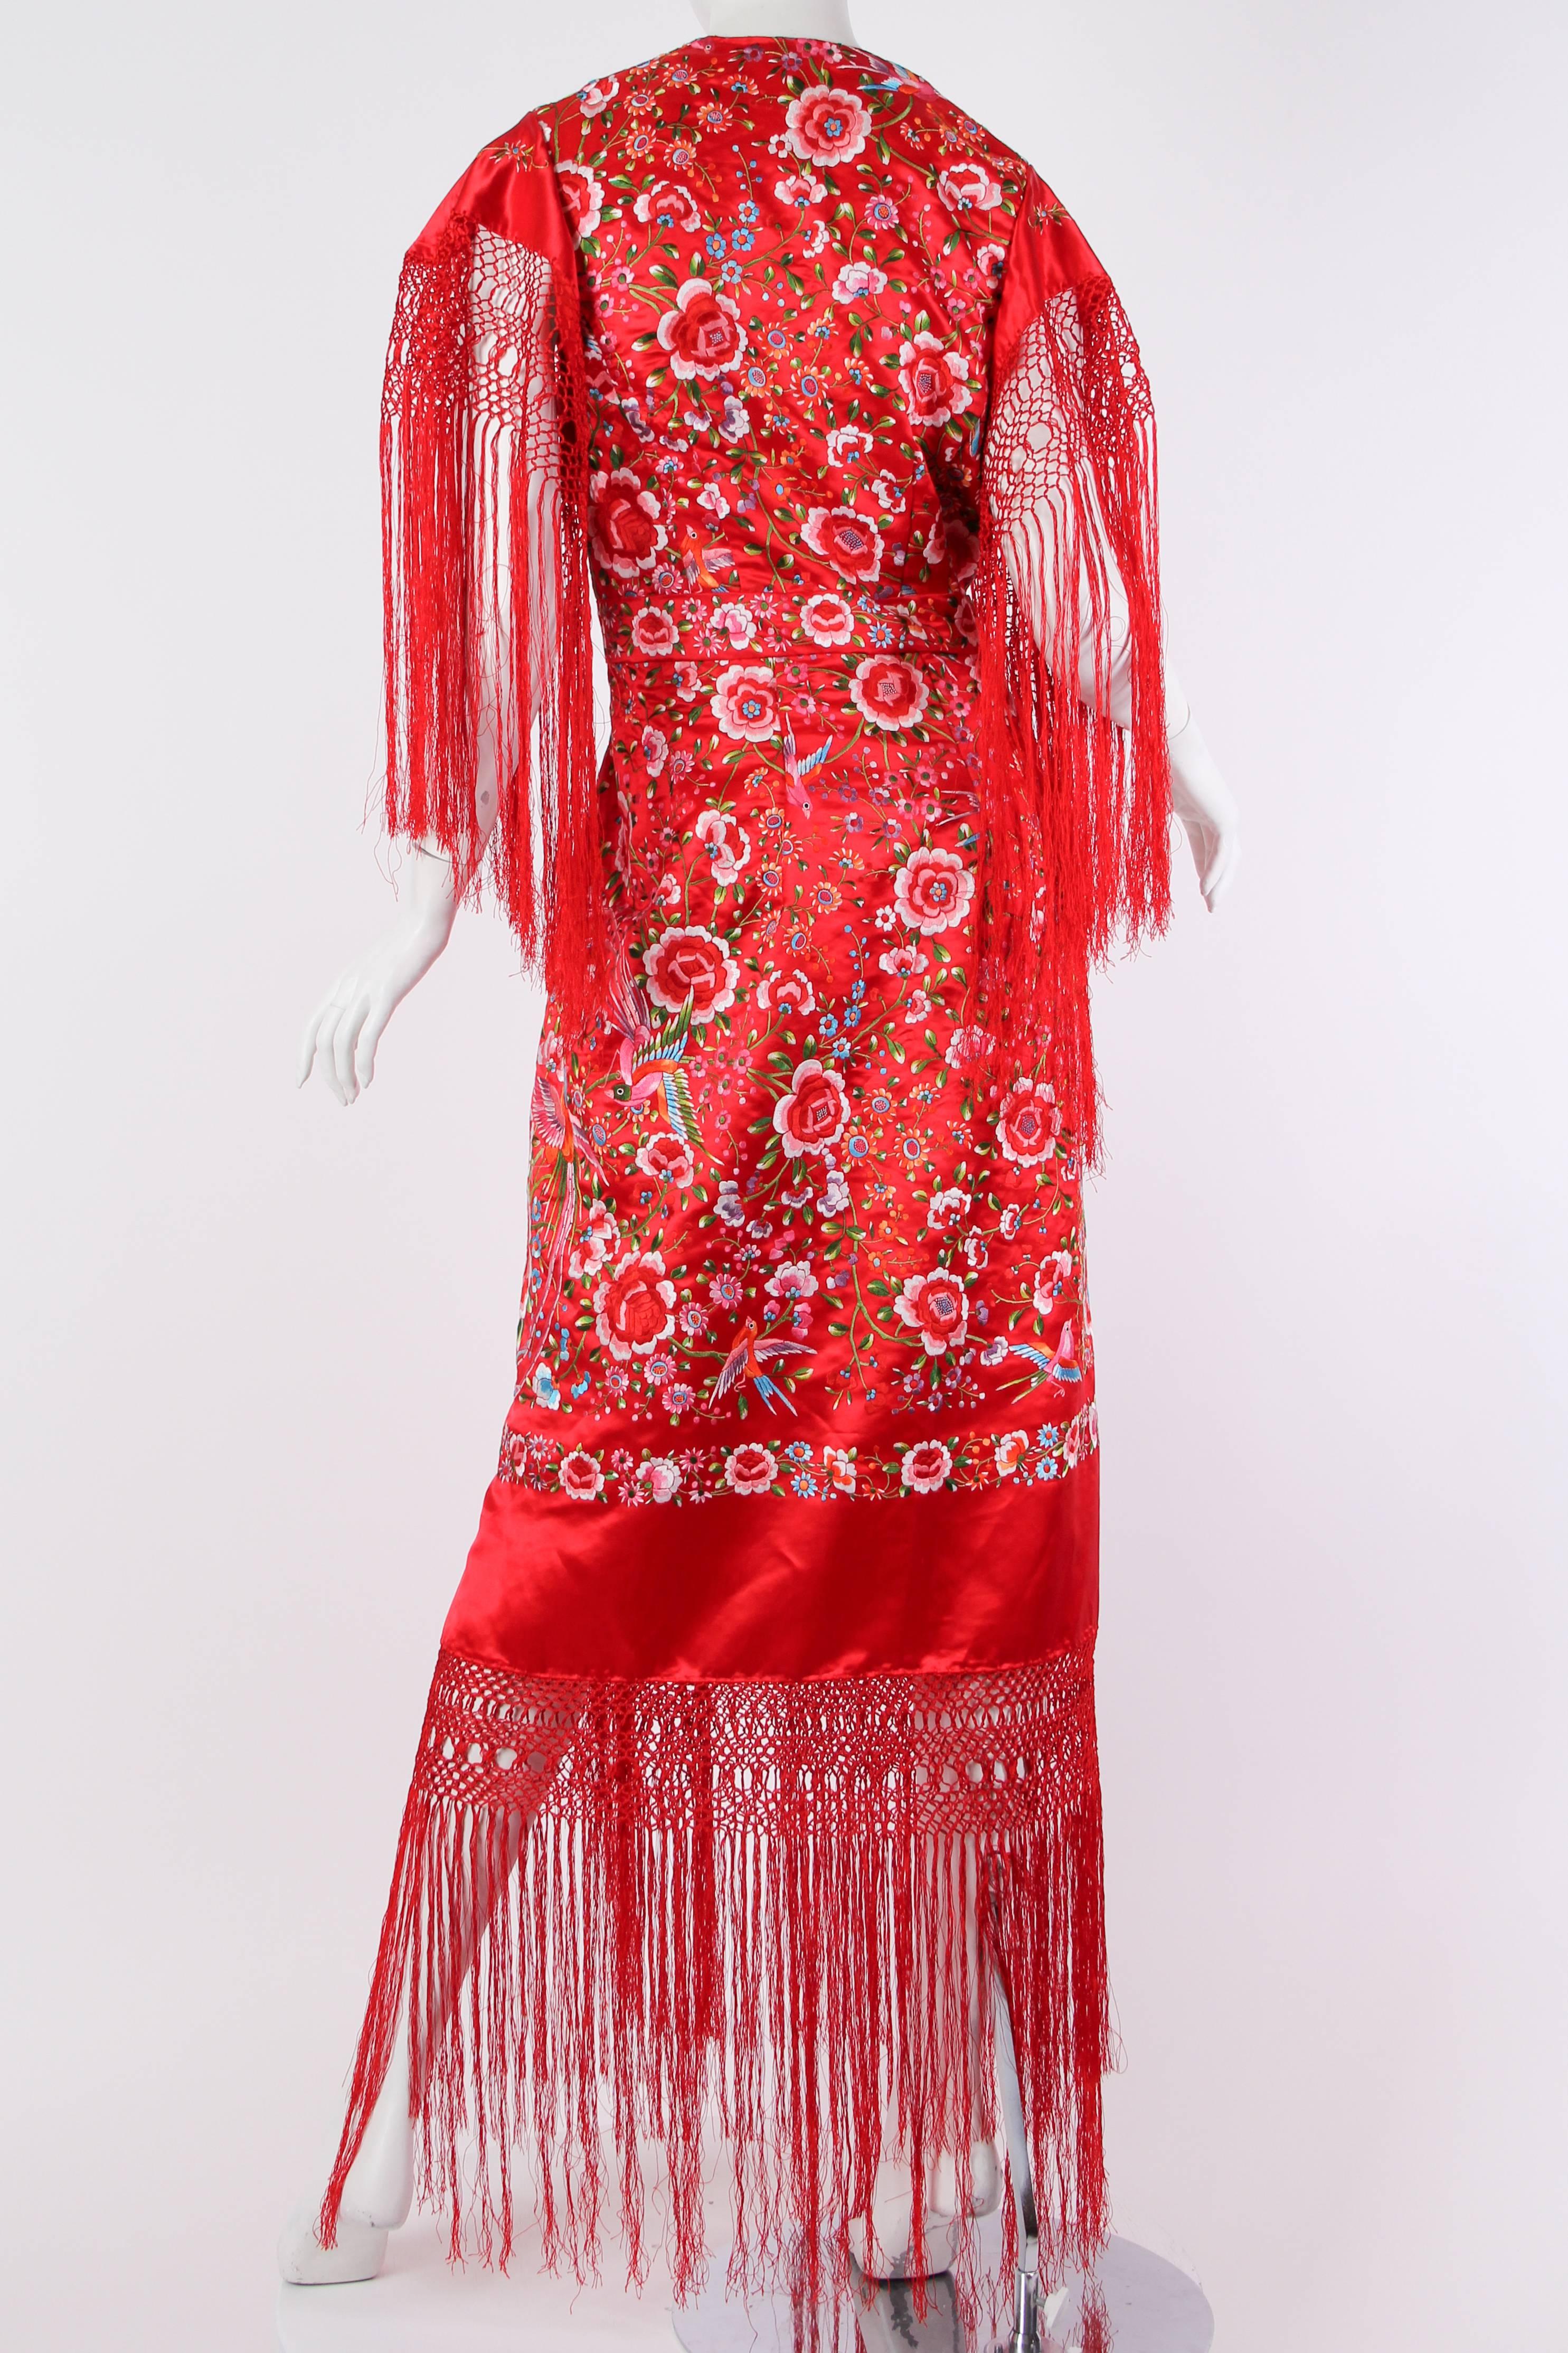 Women's Phenomenal Hand-Embroidered Chinese Shawl Dress with Fringe